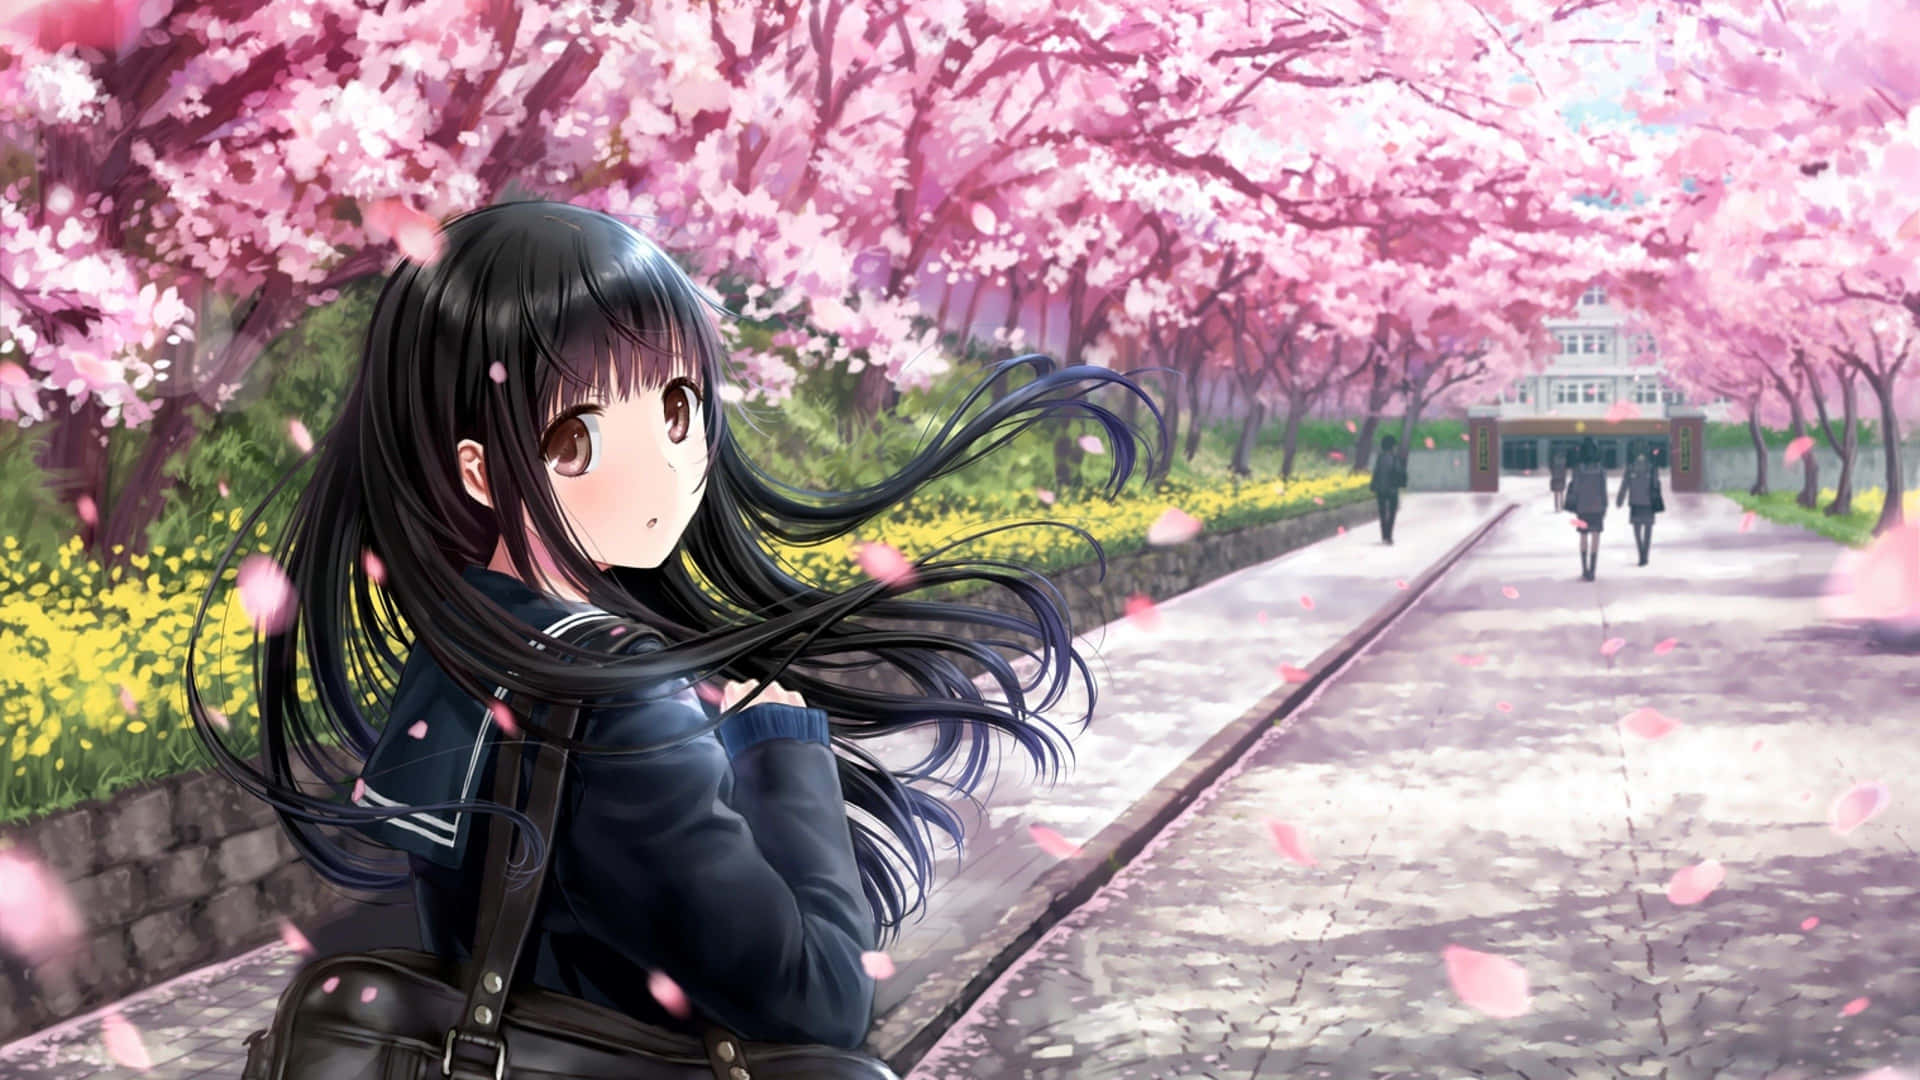 Sakura Anime 3840 X 2160 Wallpaper